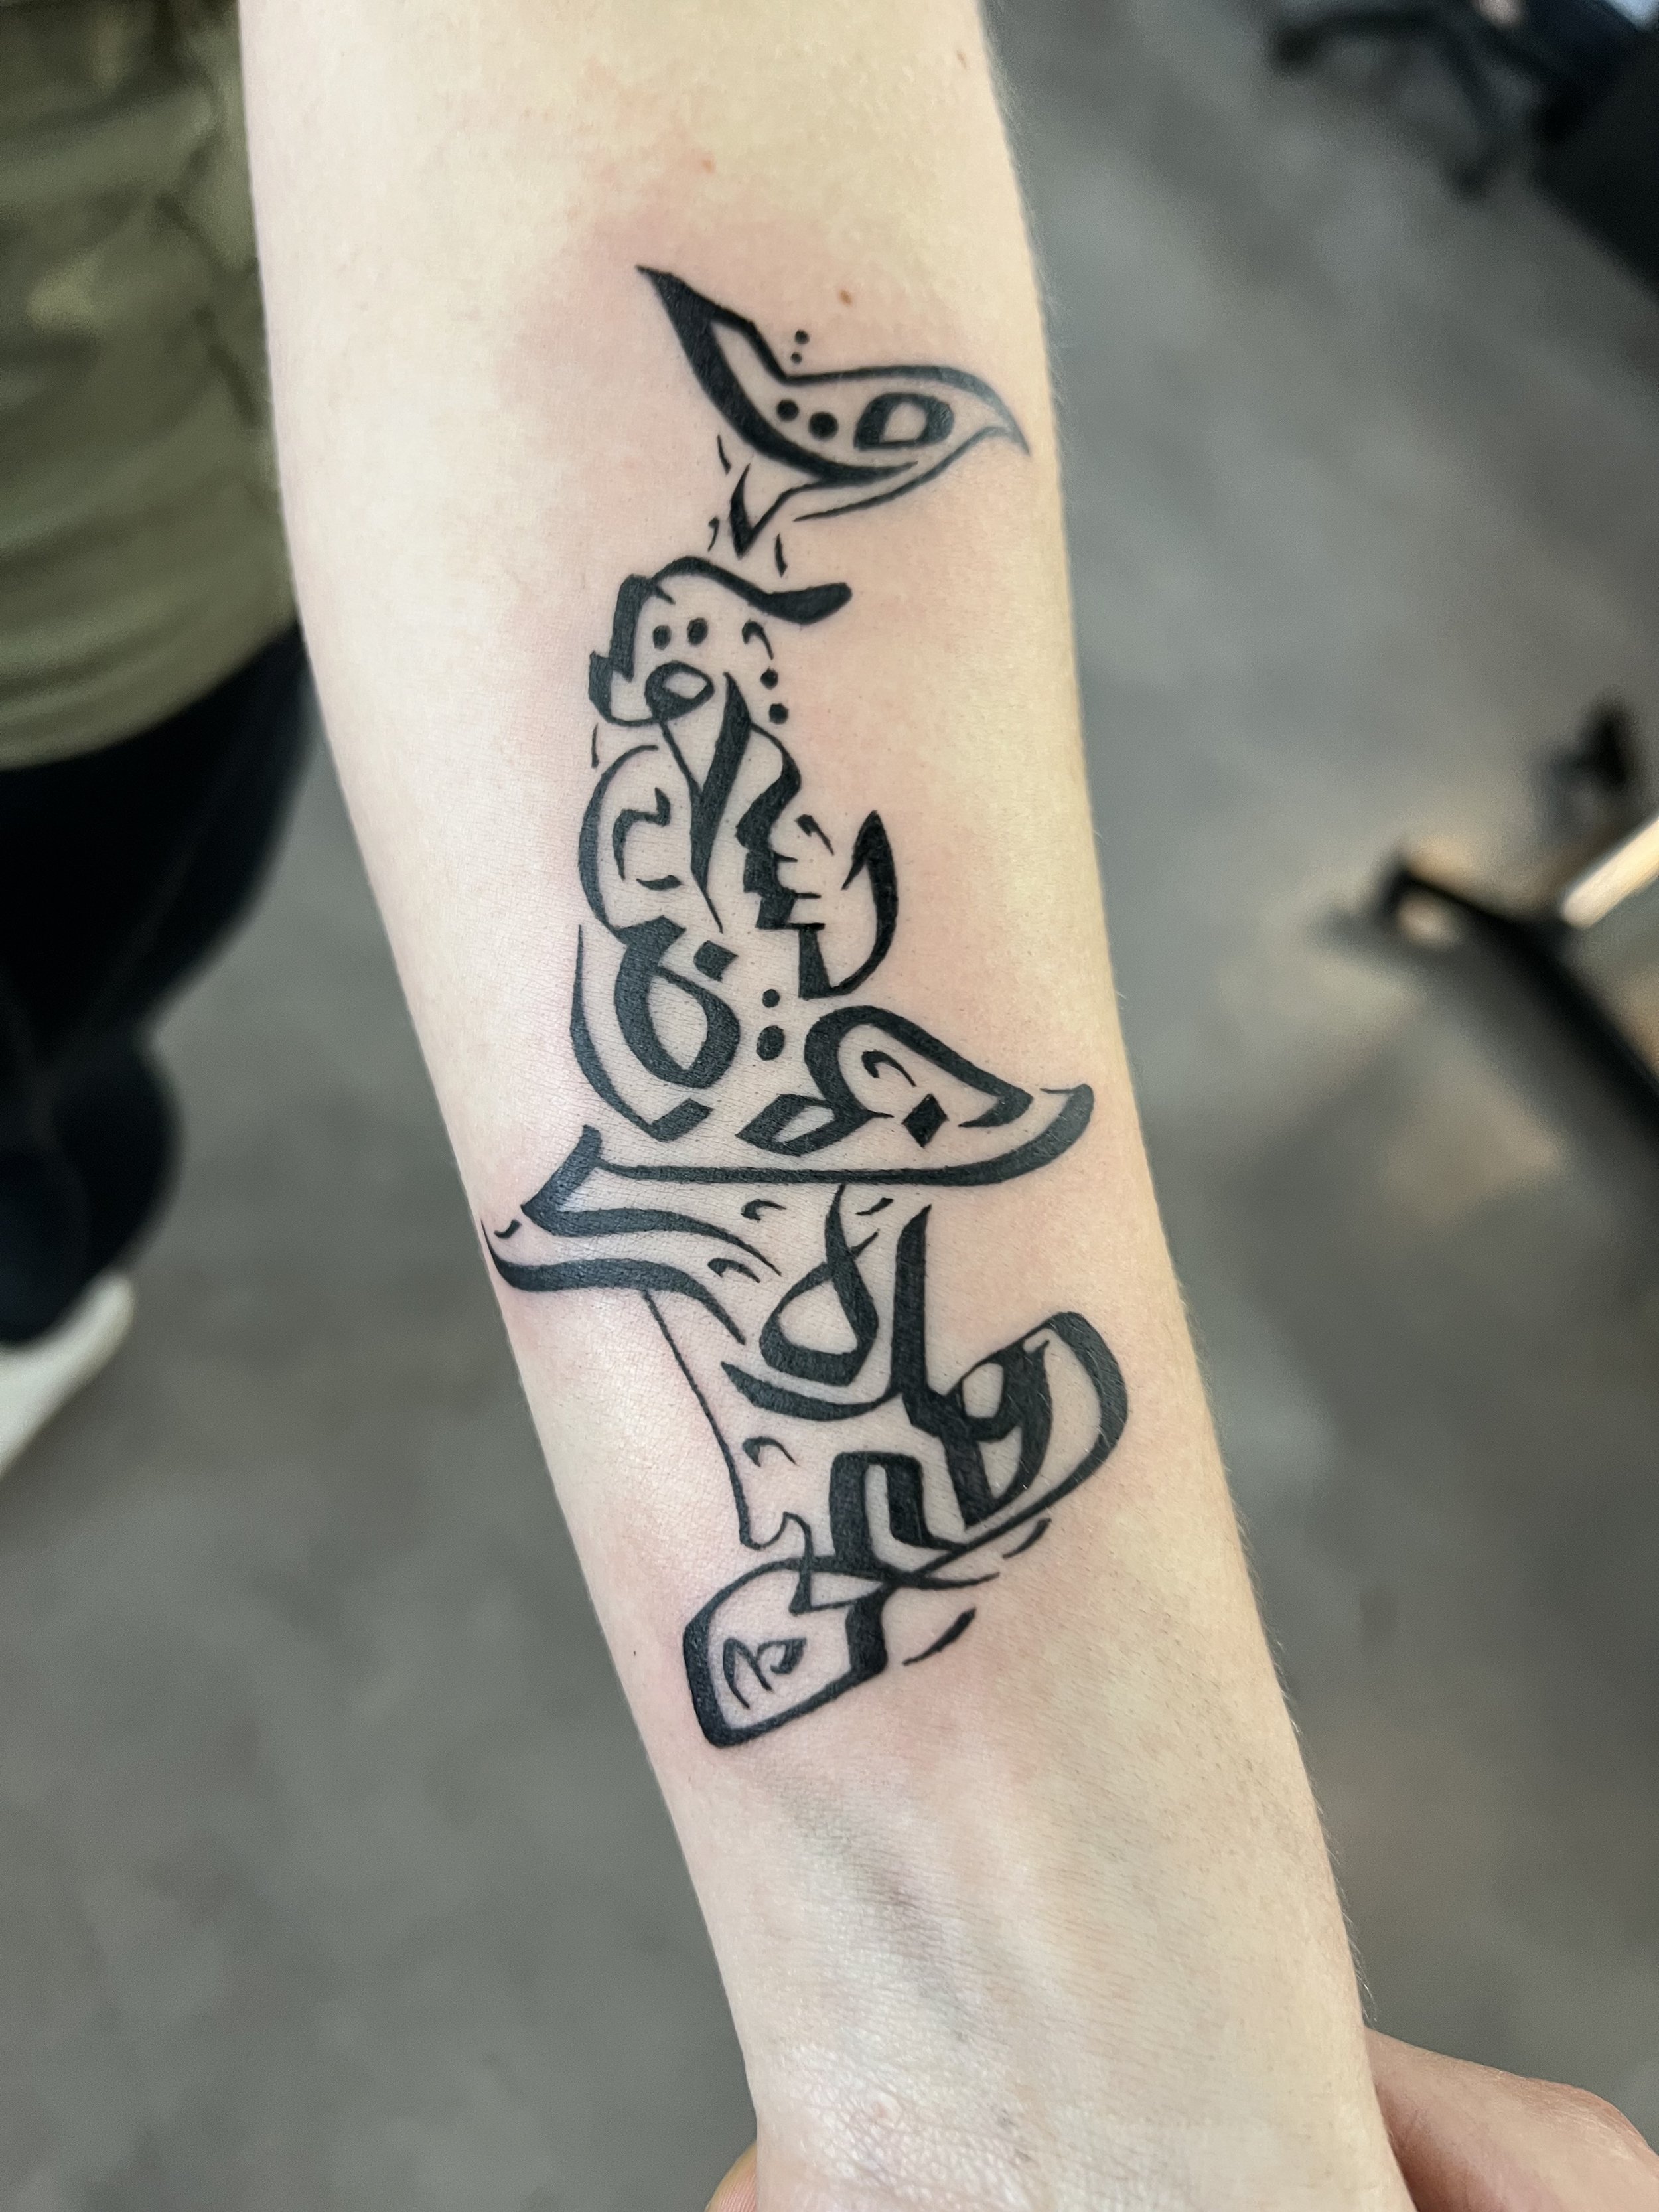 love, wisdom, peace, life | Arabic tattoo, Word tattoos, Tattoo designs and  meanings